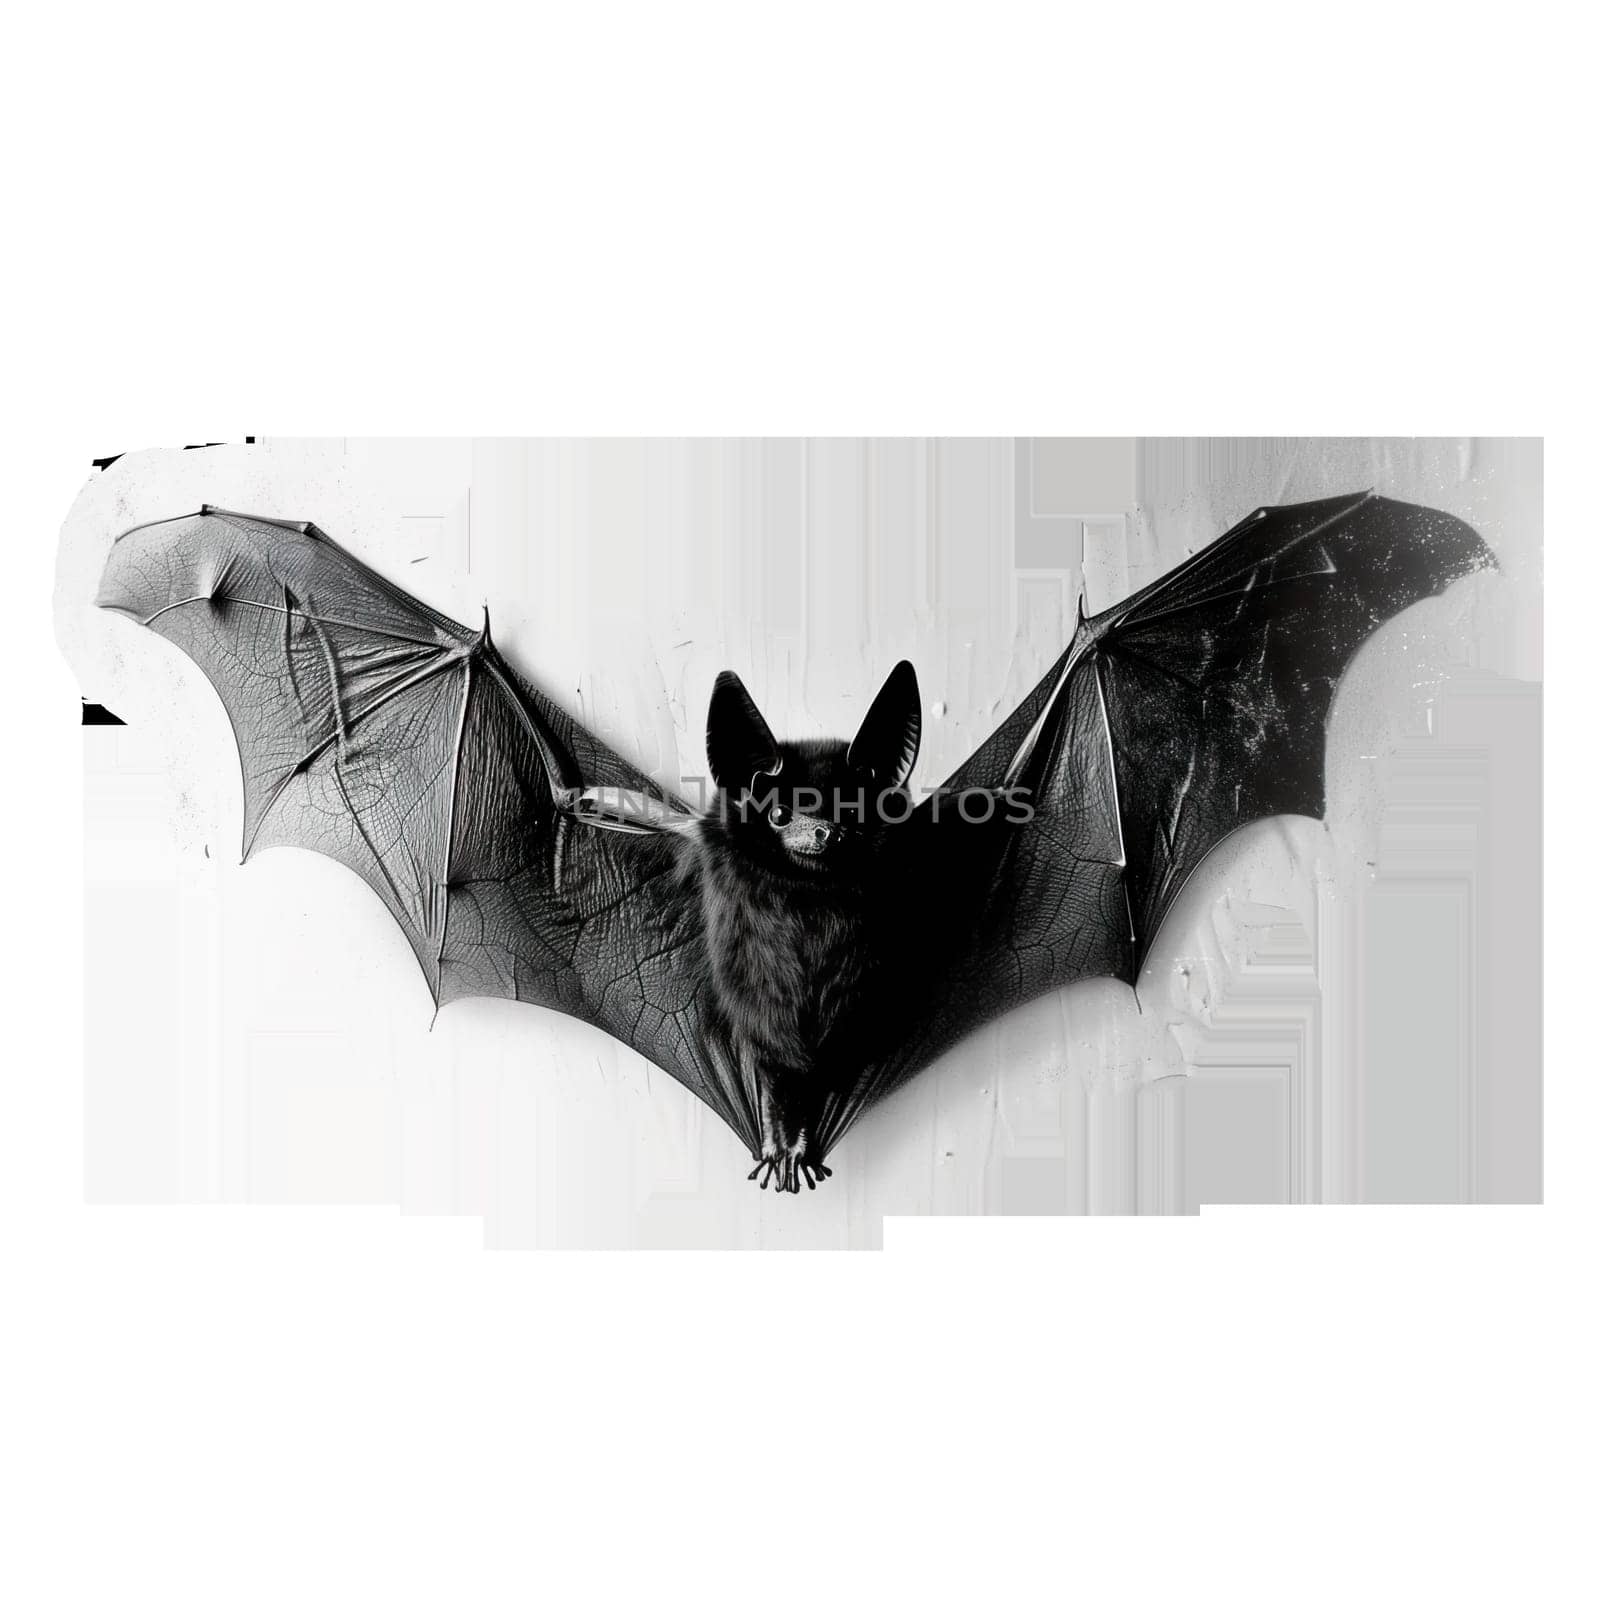 Monochrome vintage photo of halloween Bat cut out image by Dustick